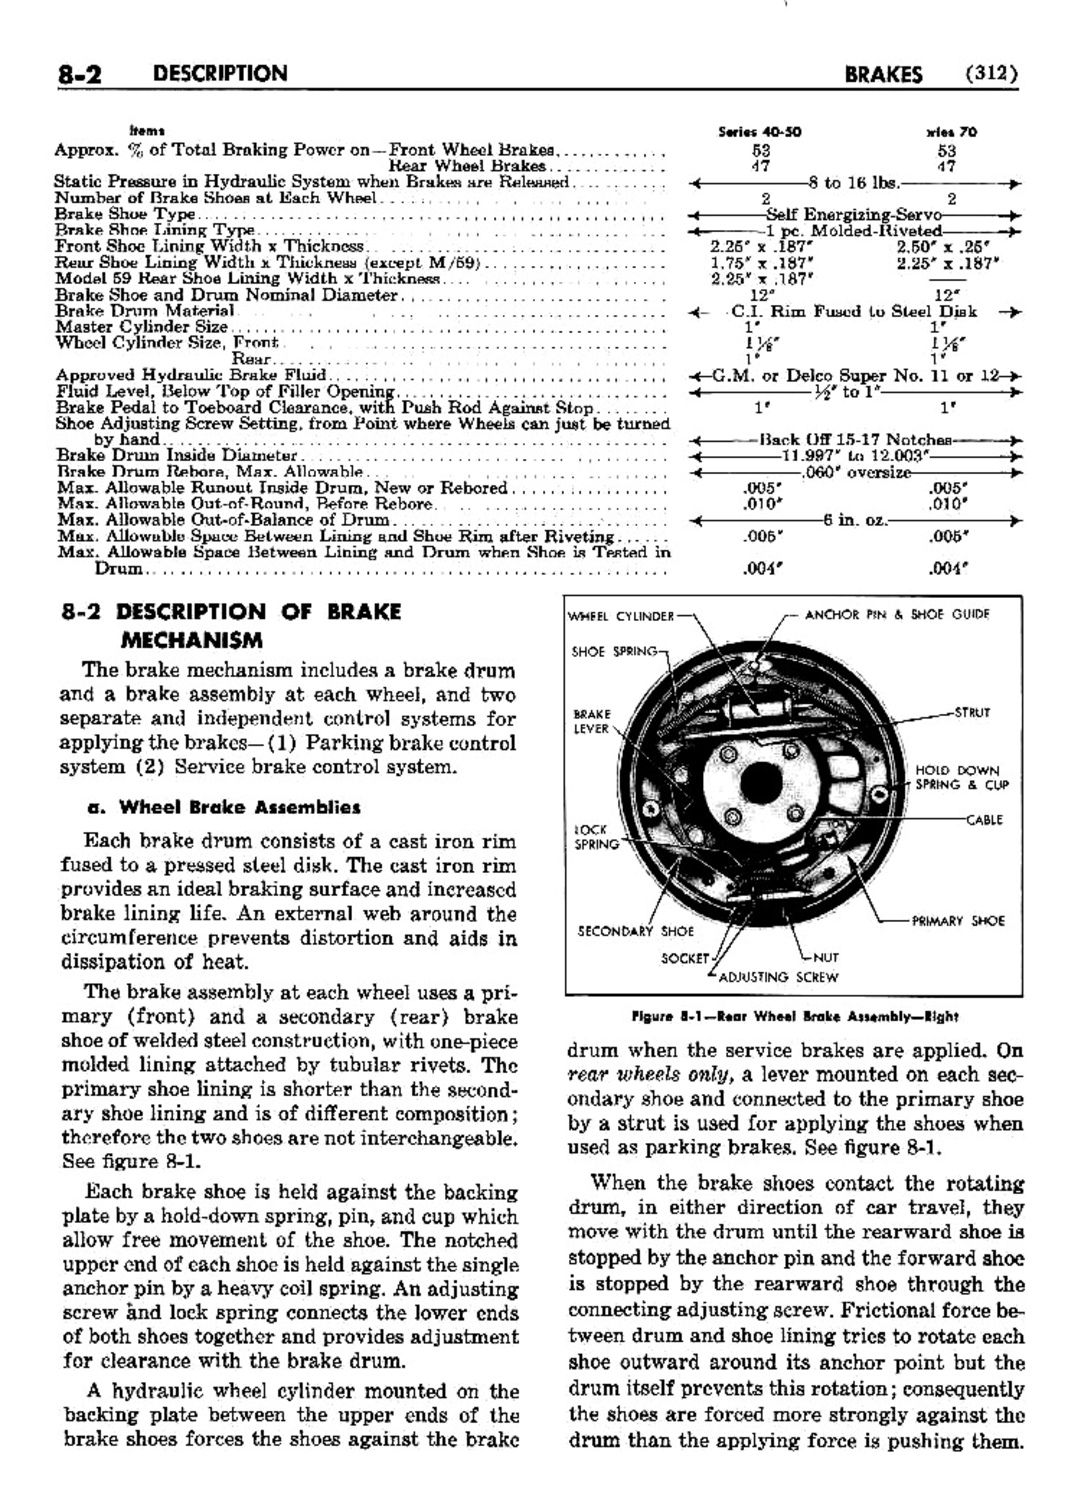 n_09 1952 Buick Shop Manual - Brakes-002-002.jpg